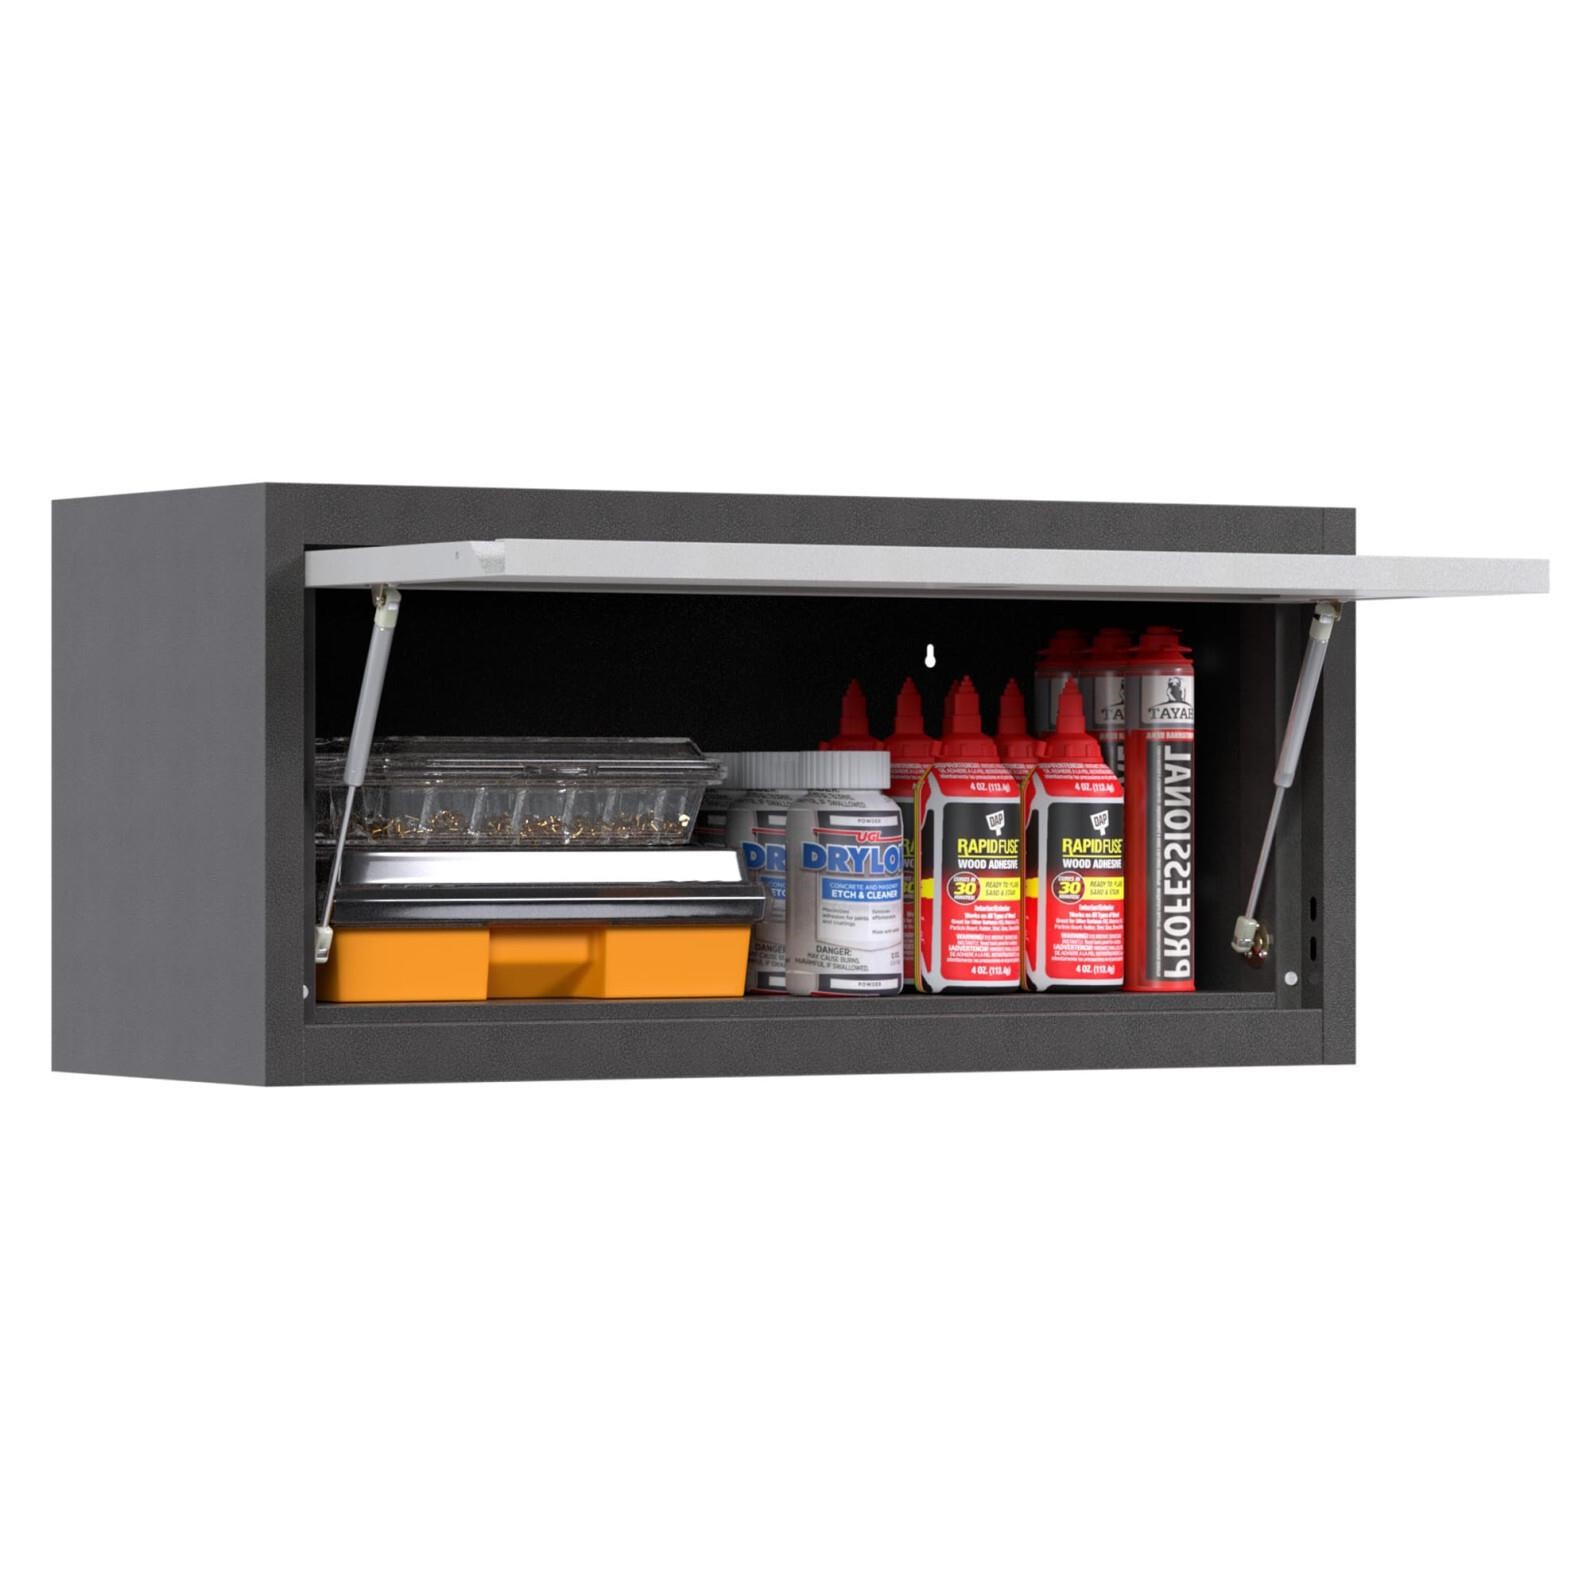 SUXXAN Metal Wall Cabinet with Up-flip Door,Wall-M